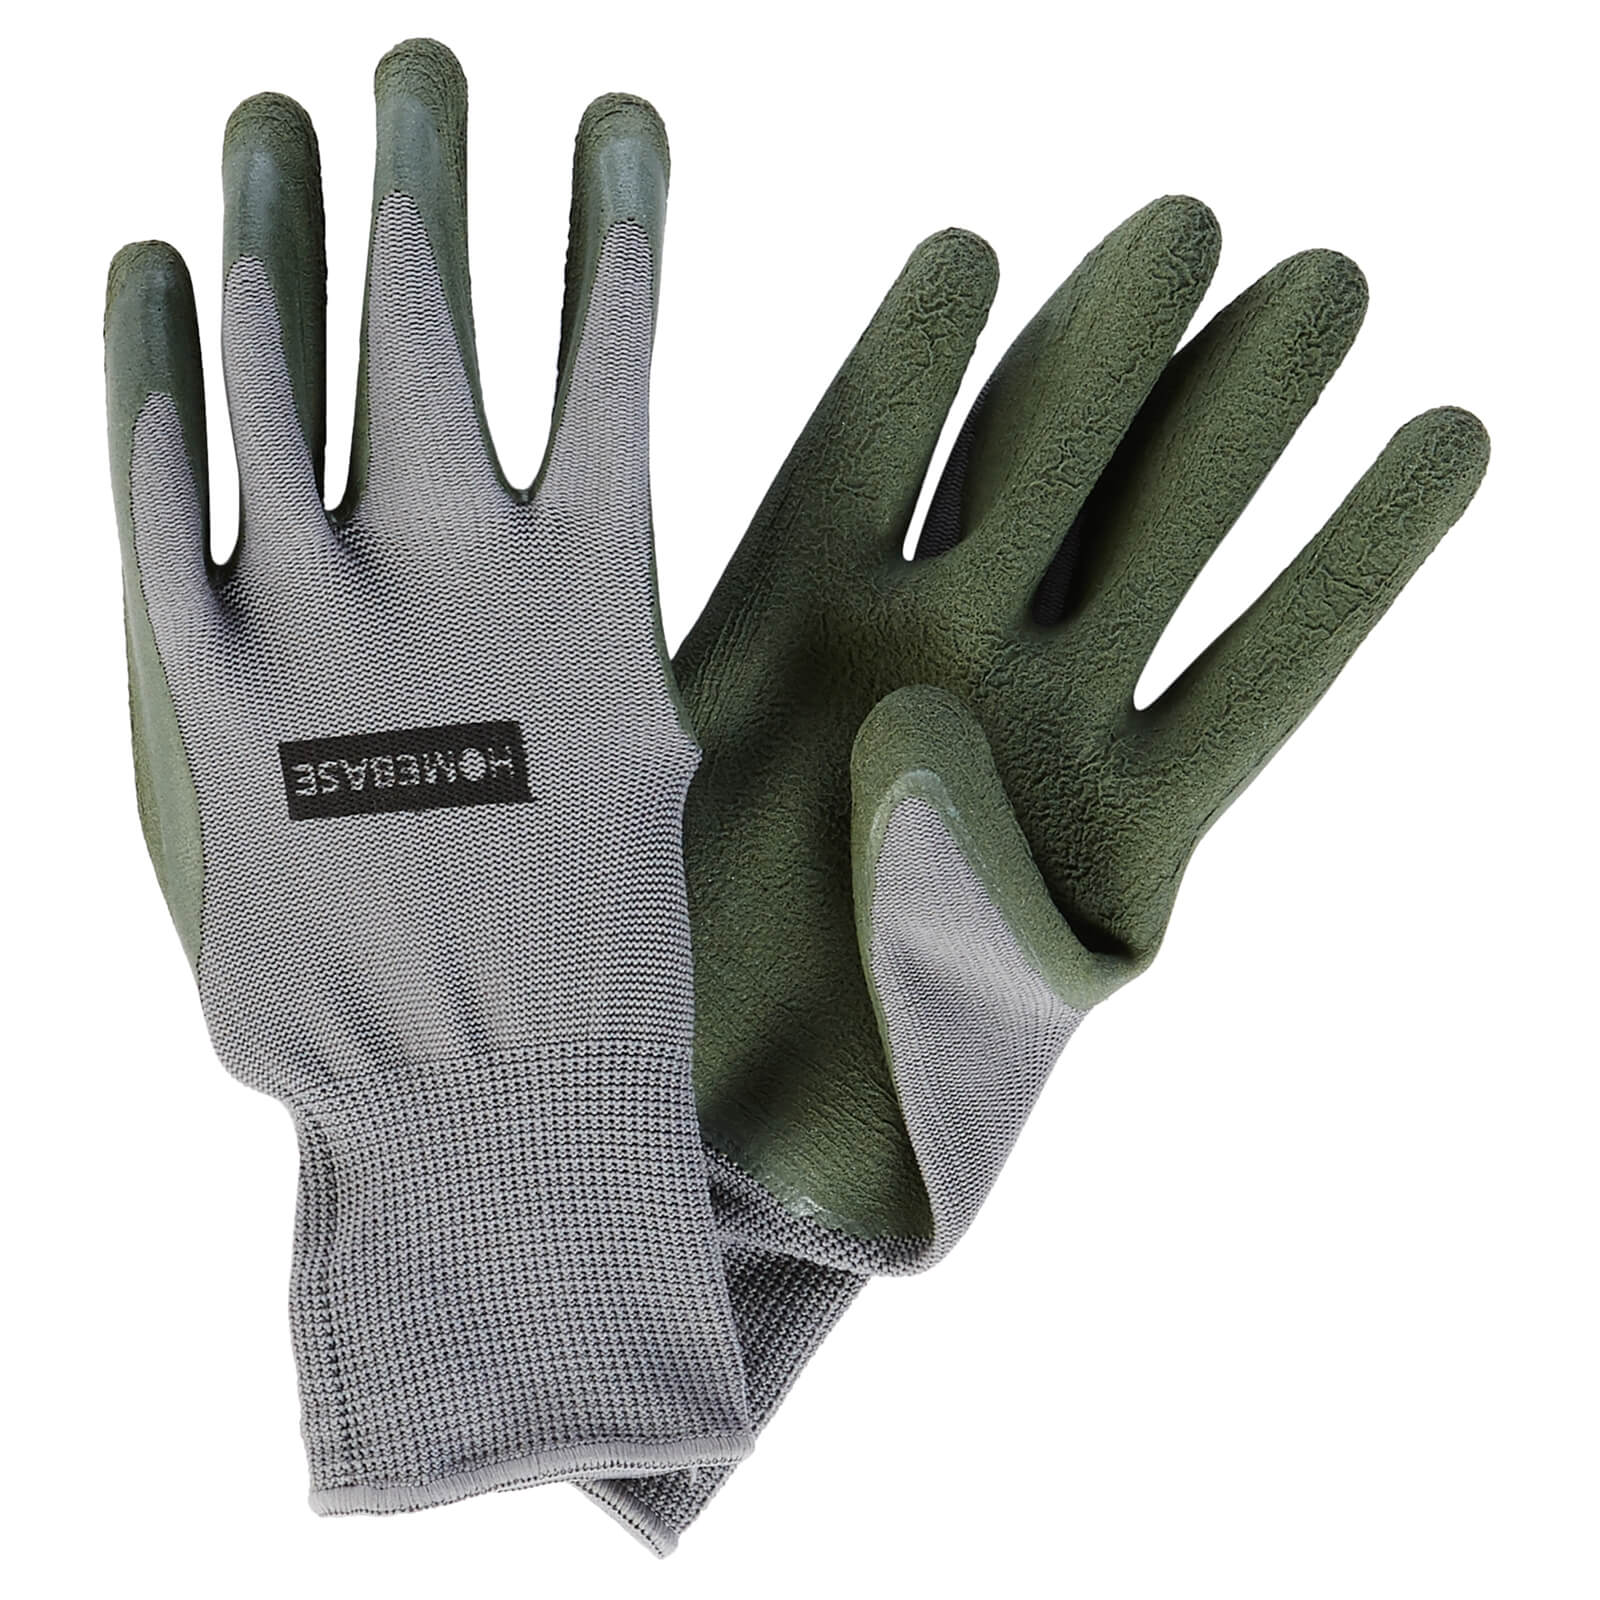 Homebase Mixed Gloves (M) 3pk